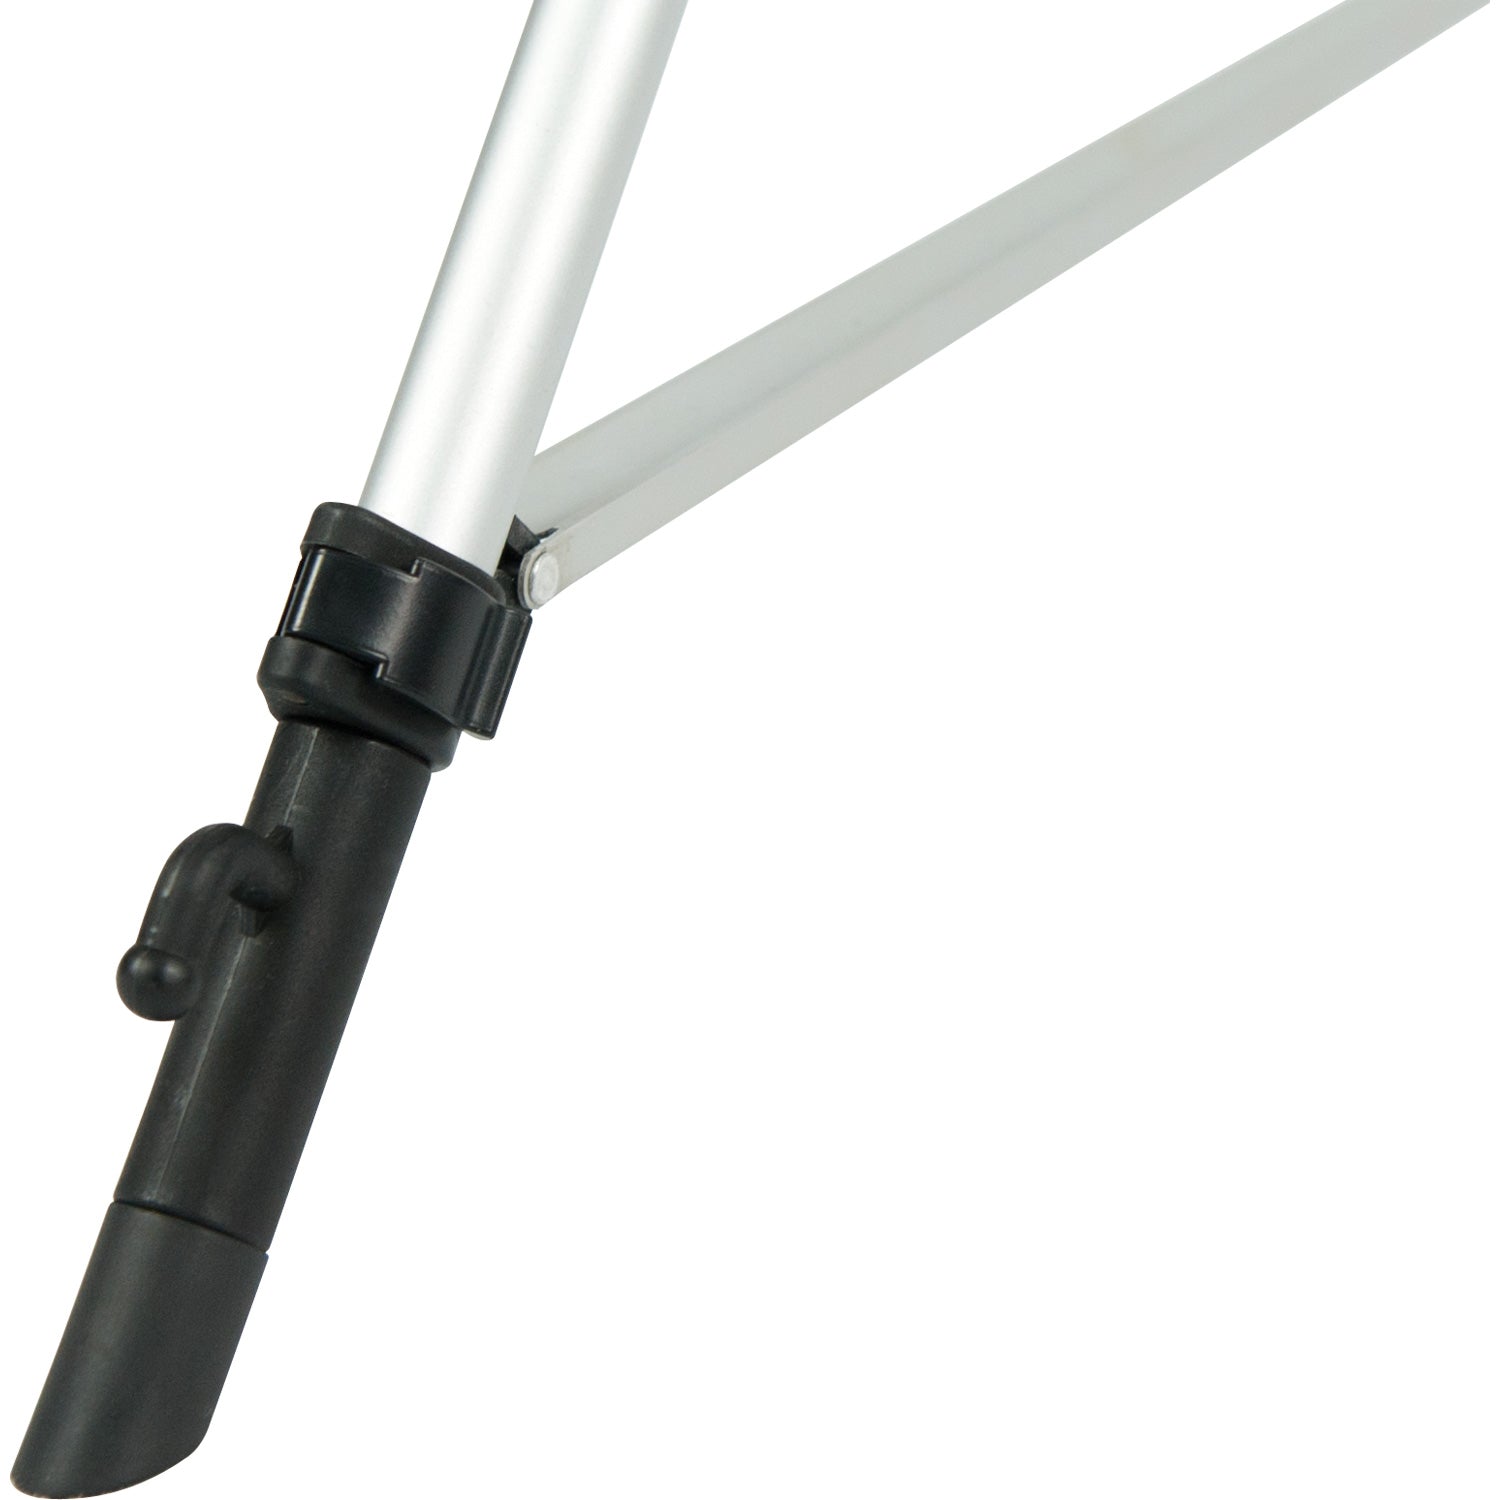 X-Drop Wrinkle-Resistant Sweep Backdrop Kit - Neutral Gray (5' x 12')